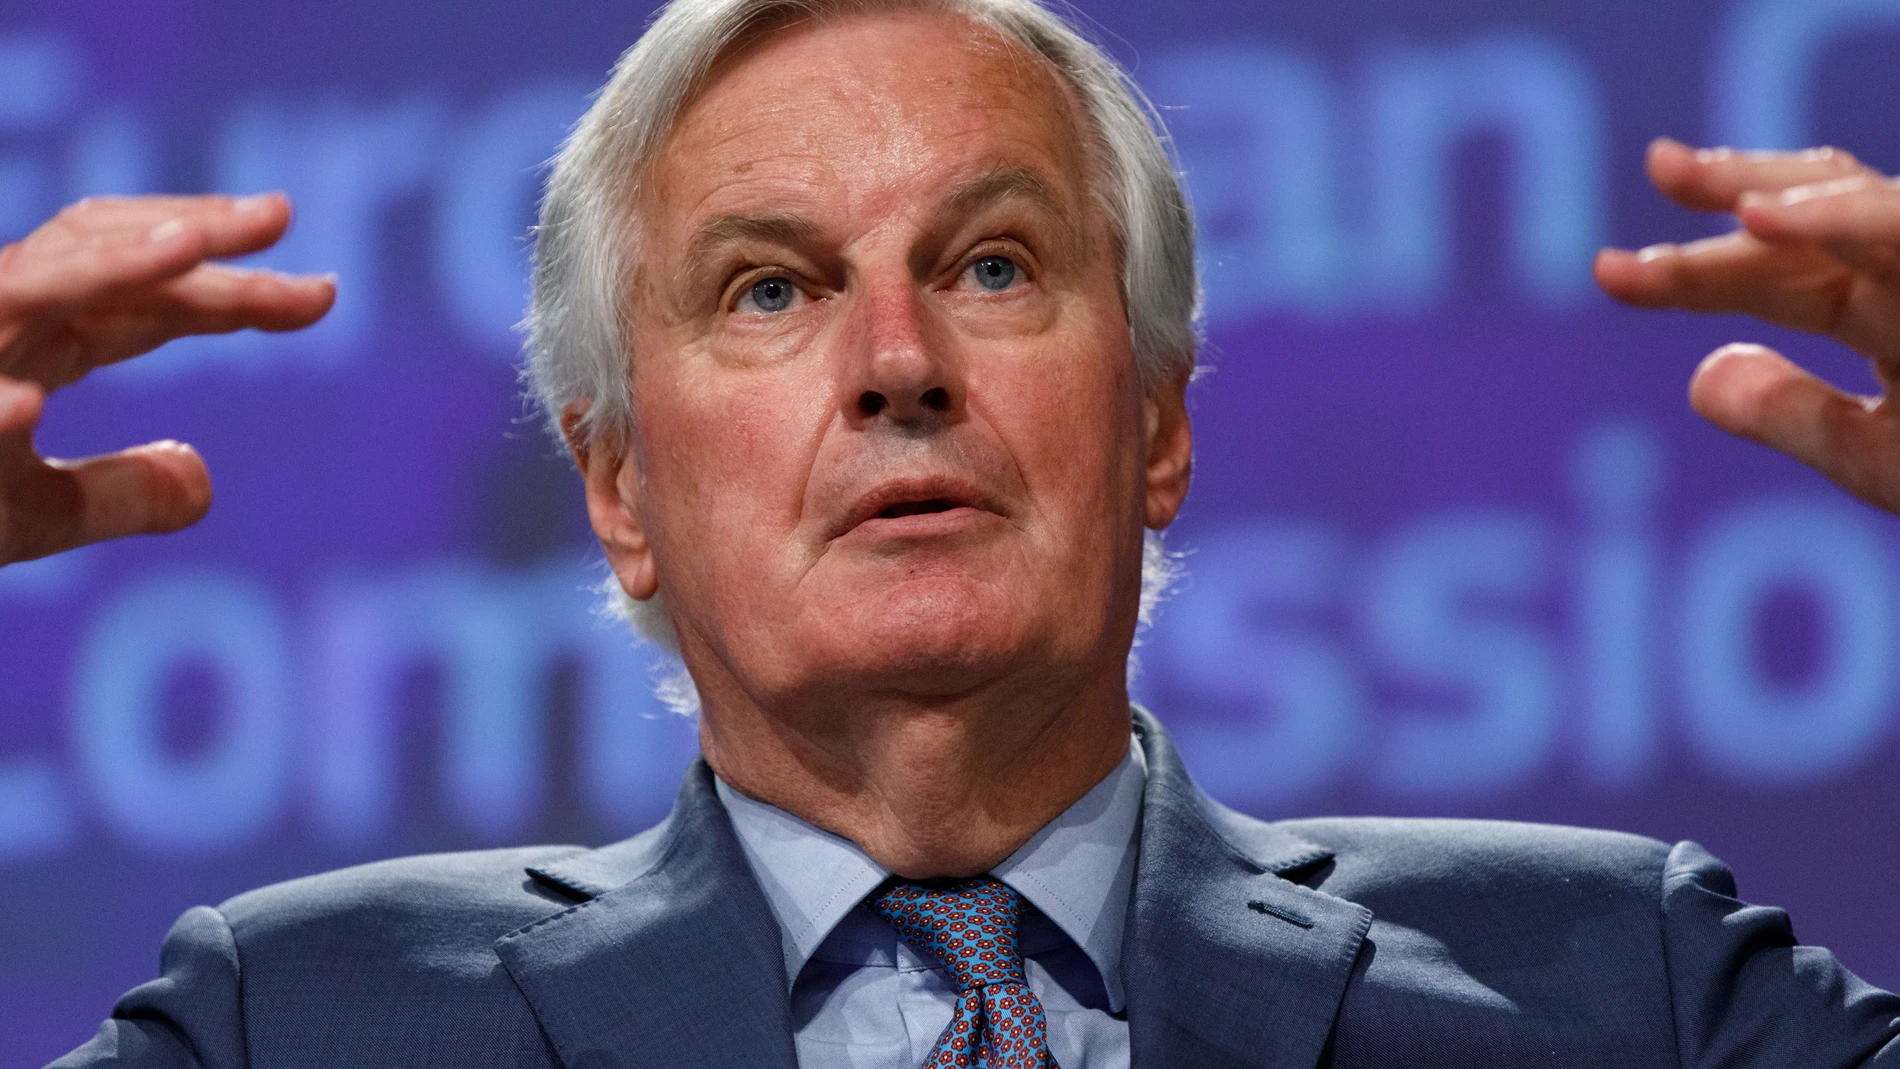 Press conference of Michel Barnier, EU chief Brexit negotiator with UK